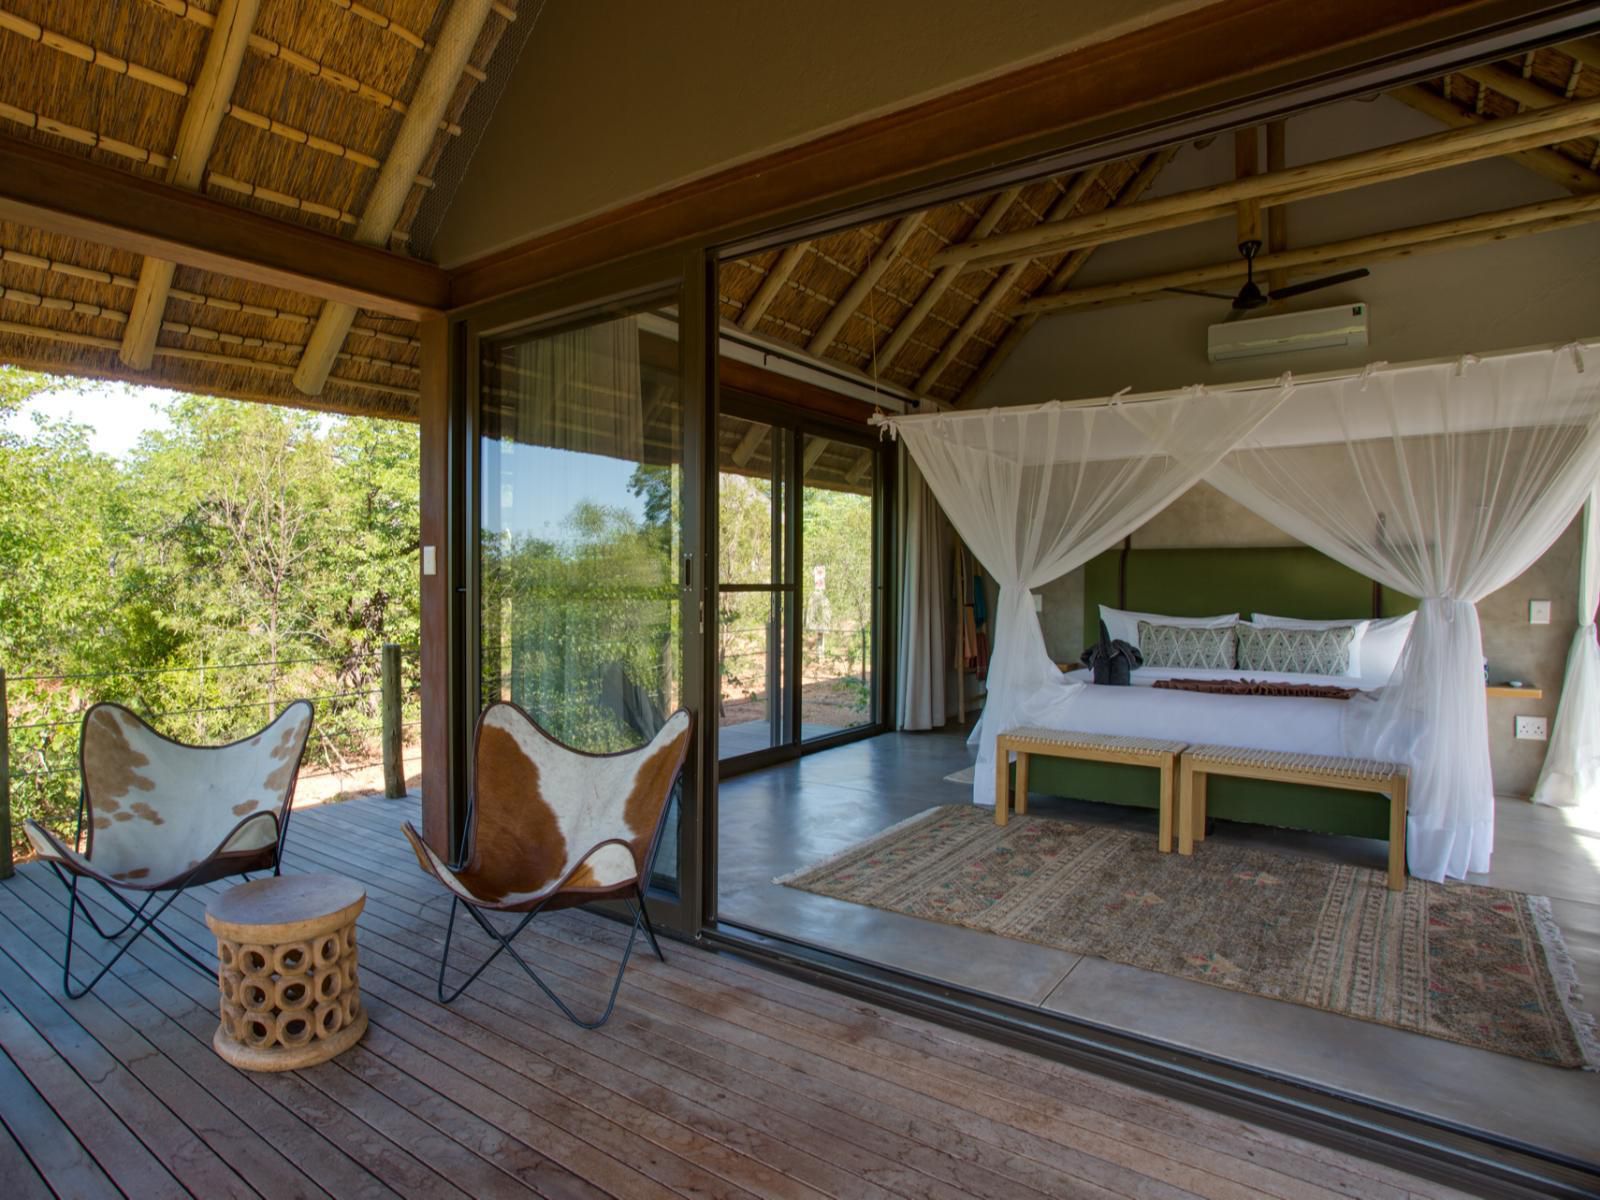 Mafunyane Lodge Klaserie Private Nature Reserve Mpumalanga South Africa Bedroom